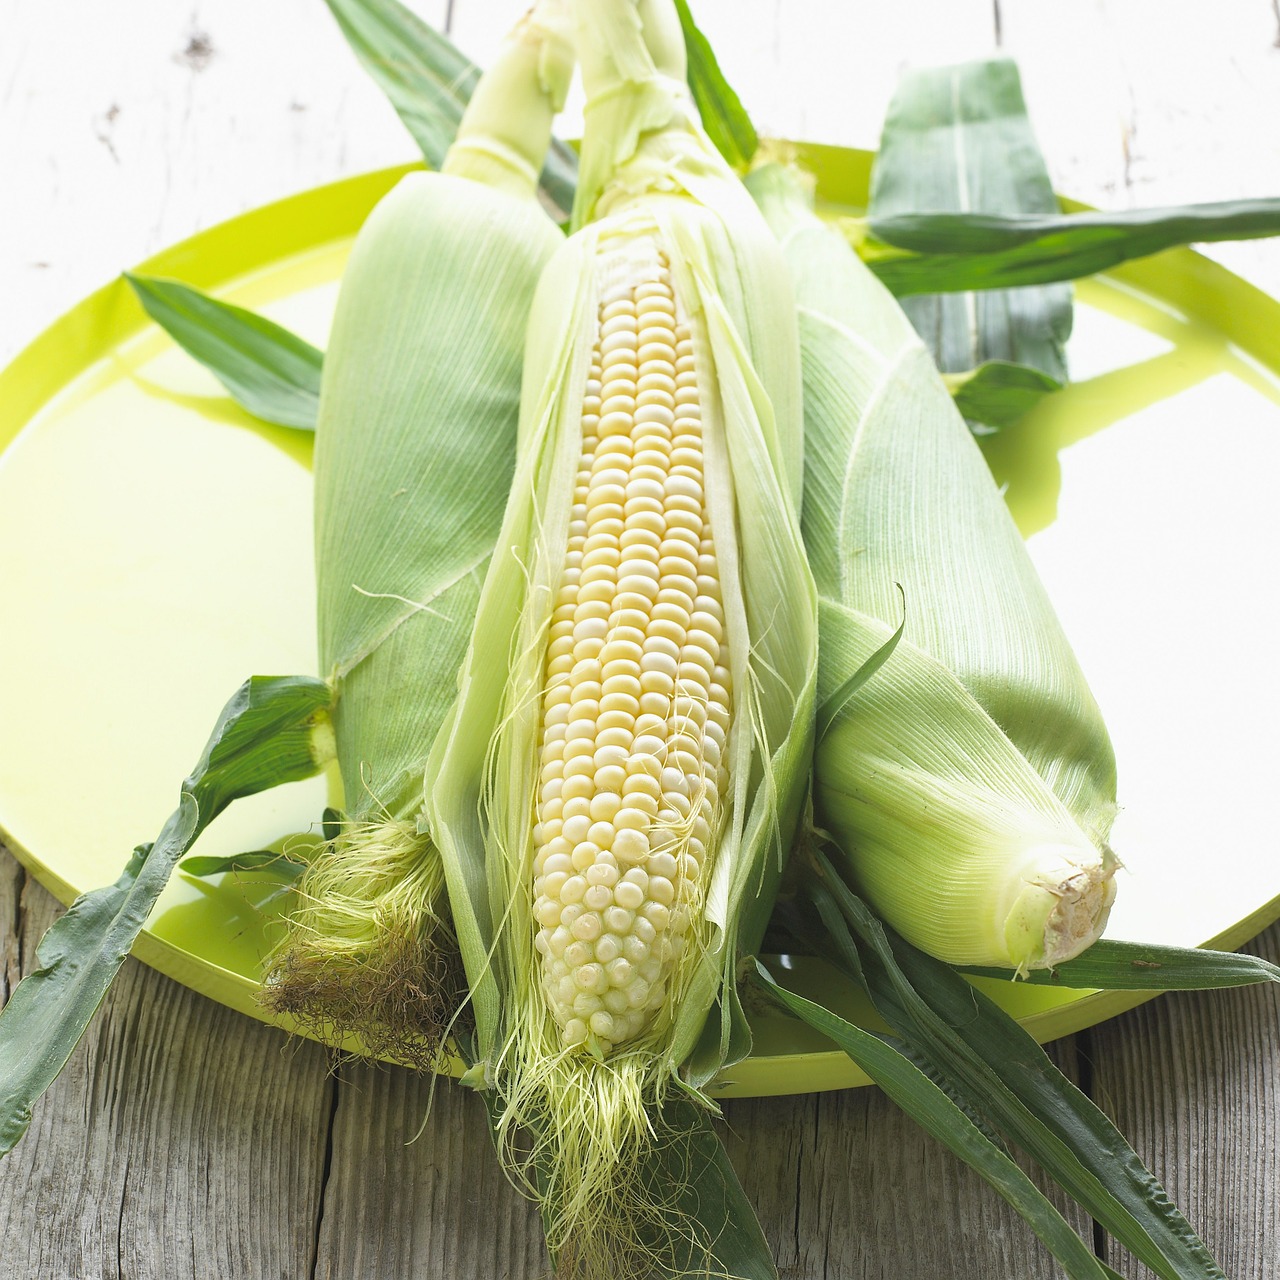 Oven-Roasted Fresh Corn on the Cob